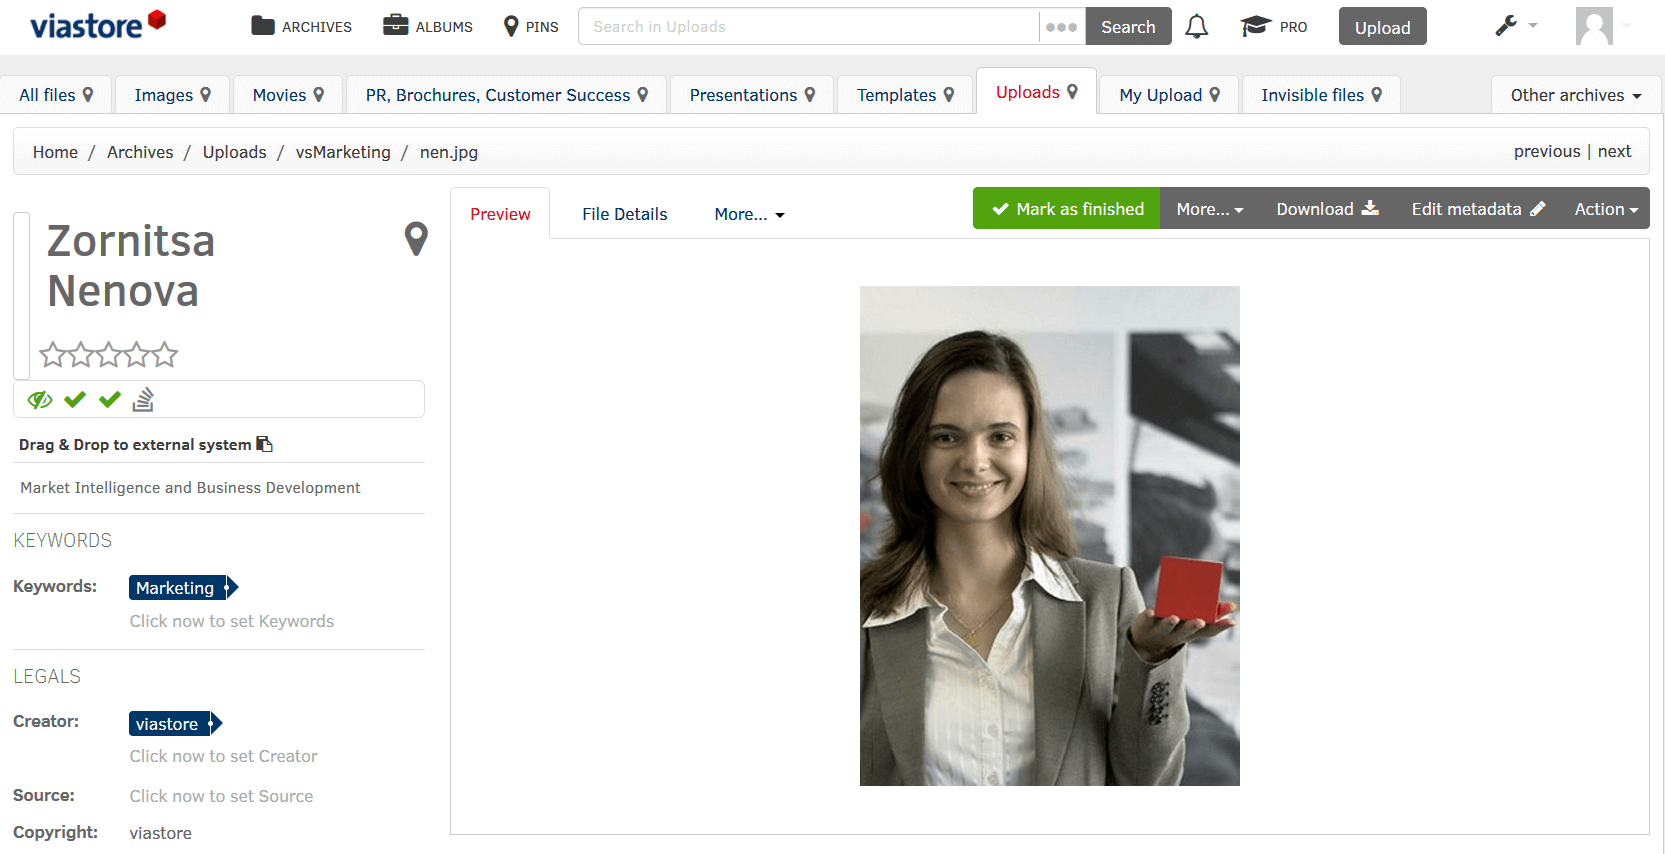 Image of Zornitsa Nenova as a digital asset with metadata in viastore's Fotoware DAM